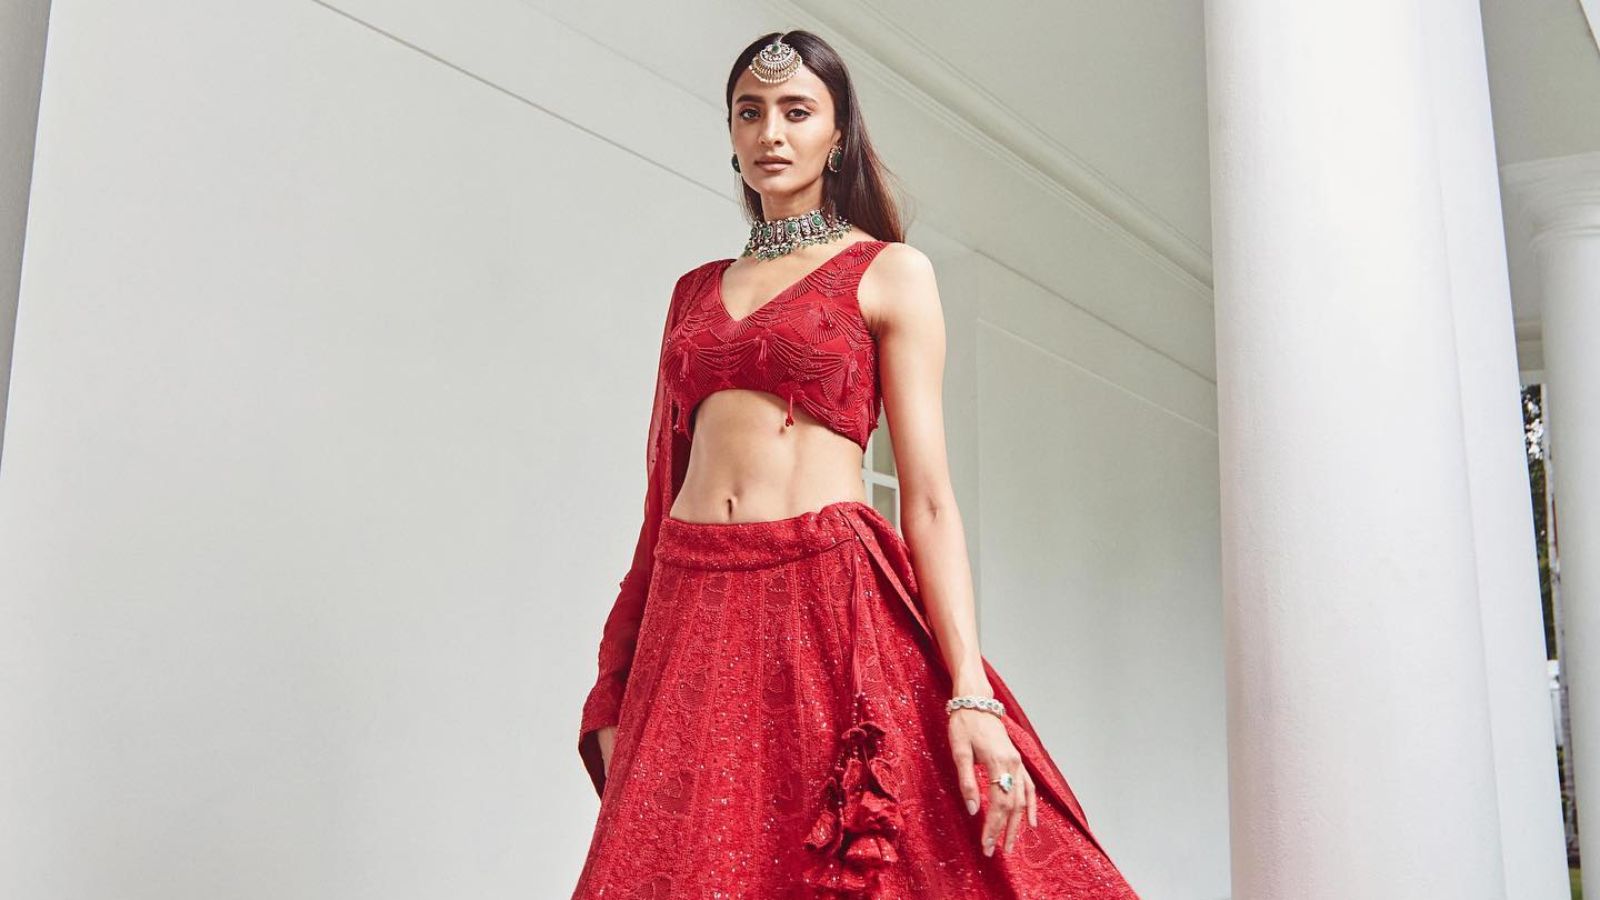 Saree Blush Pink – Anjul Bhandari